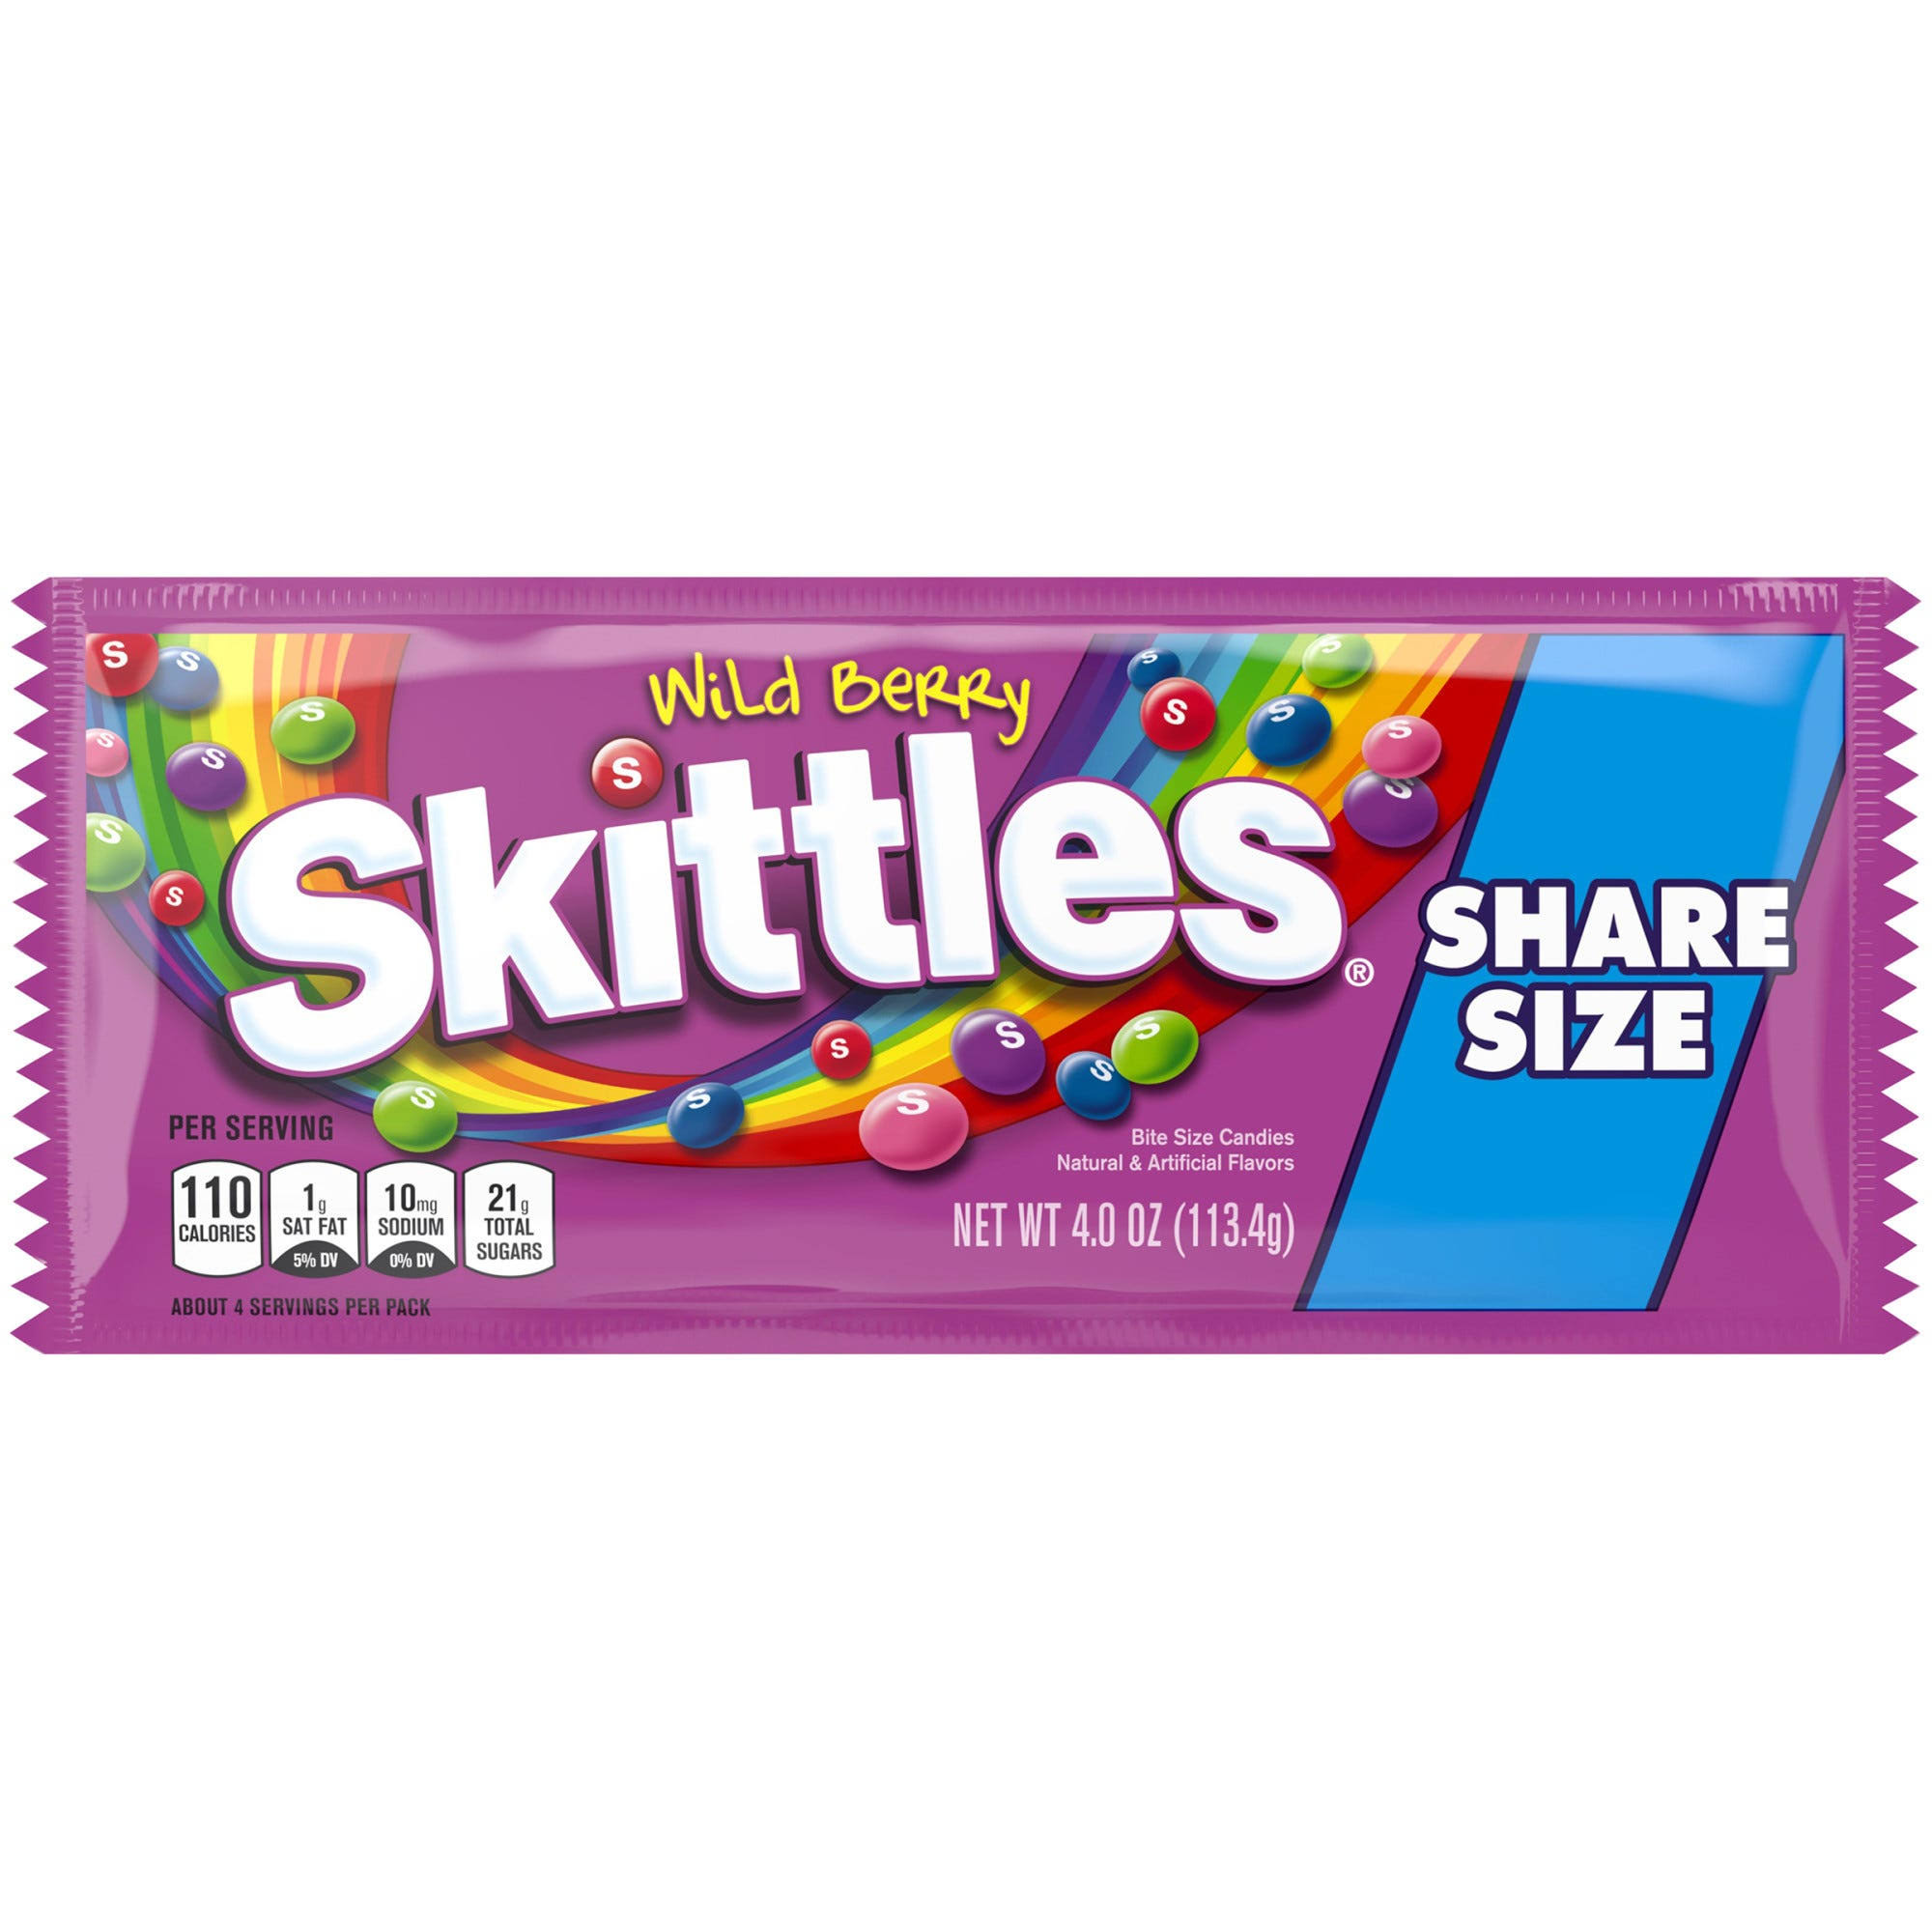 Skittles Bite Size Candies - King Size, Wild Berry, 4oz